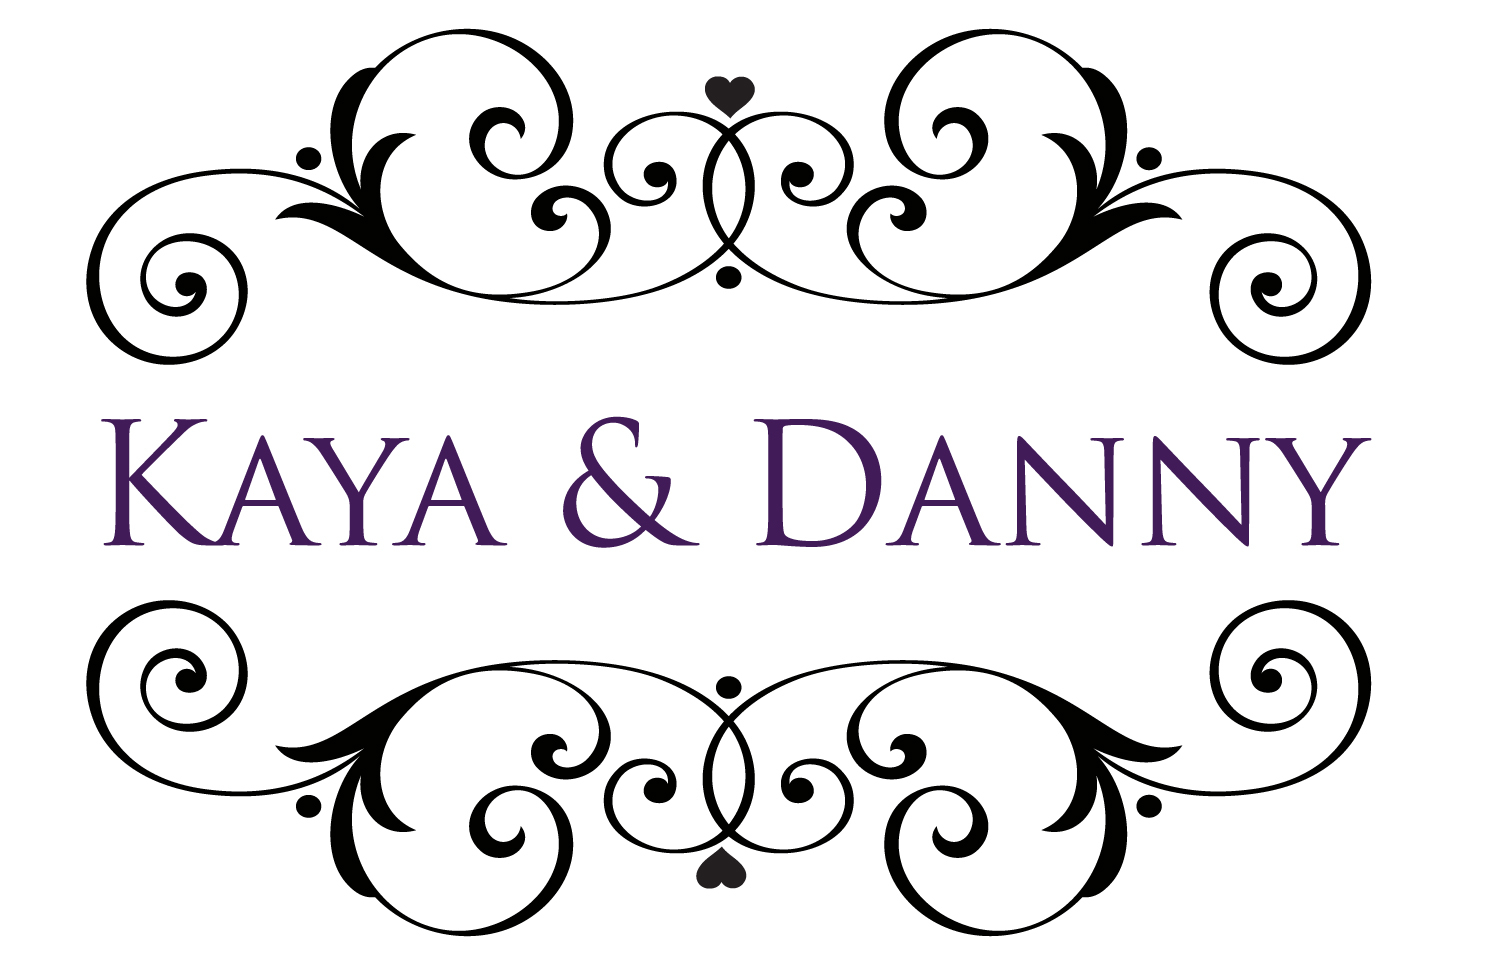 Double Trouble Designs Wedding Monograms Wine Bottle Label For Kaya